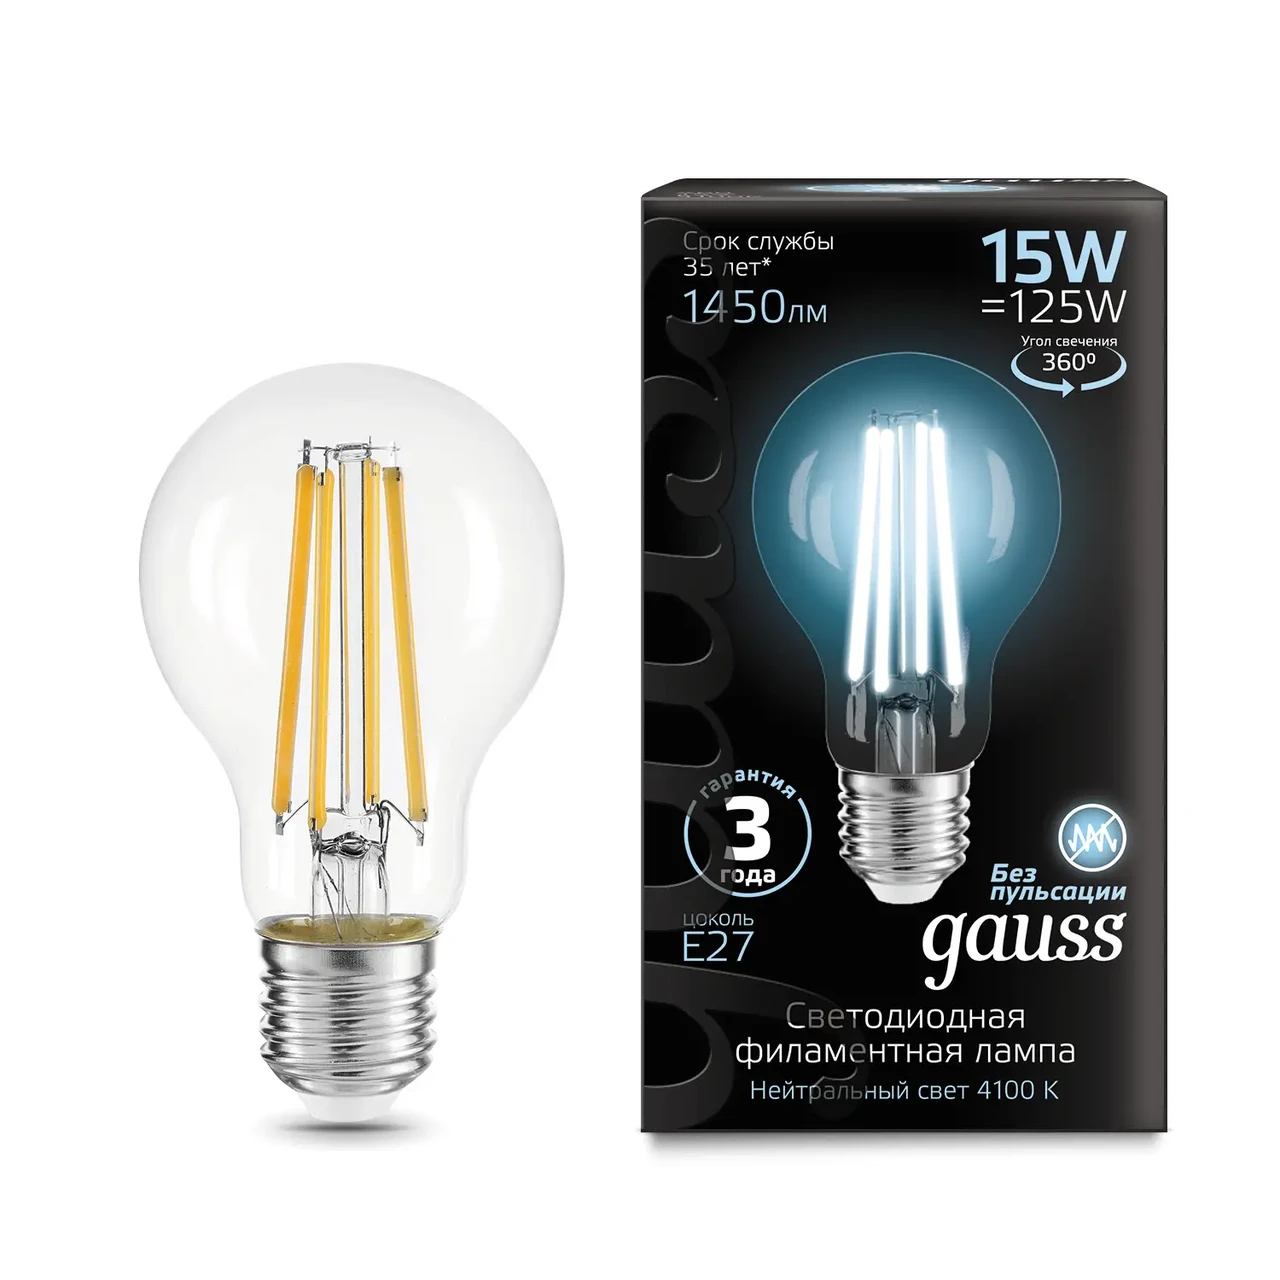 Лампа Gauss Filament А60 15W 1450lm 4100К Е27 LED 1/10/40, фото 1